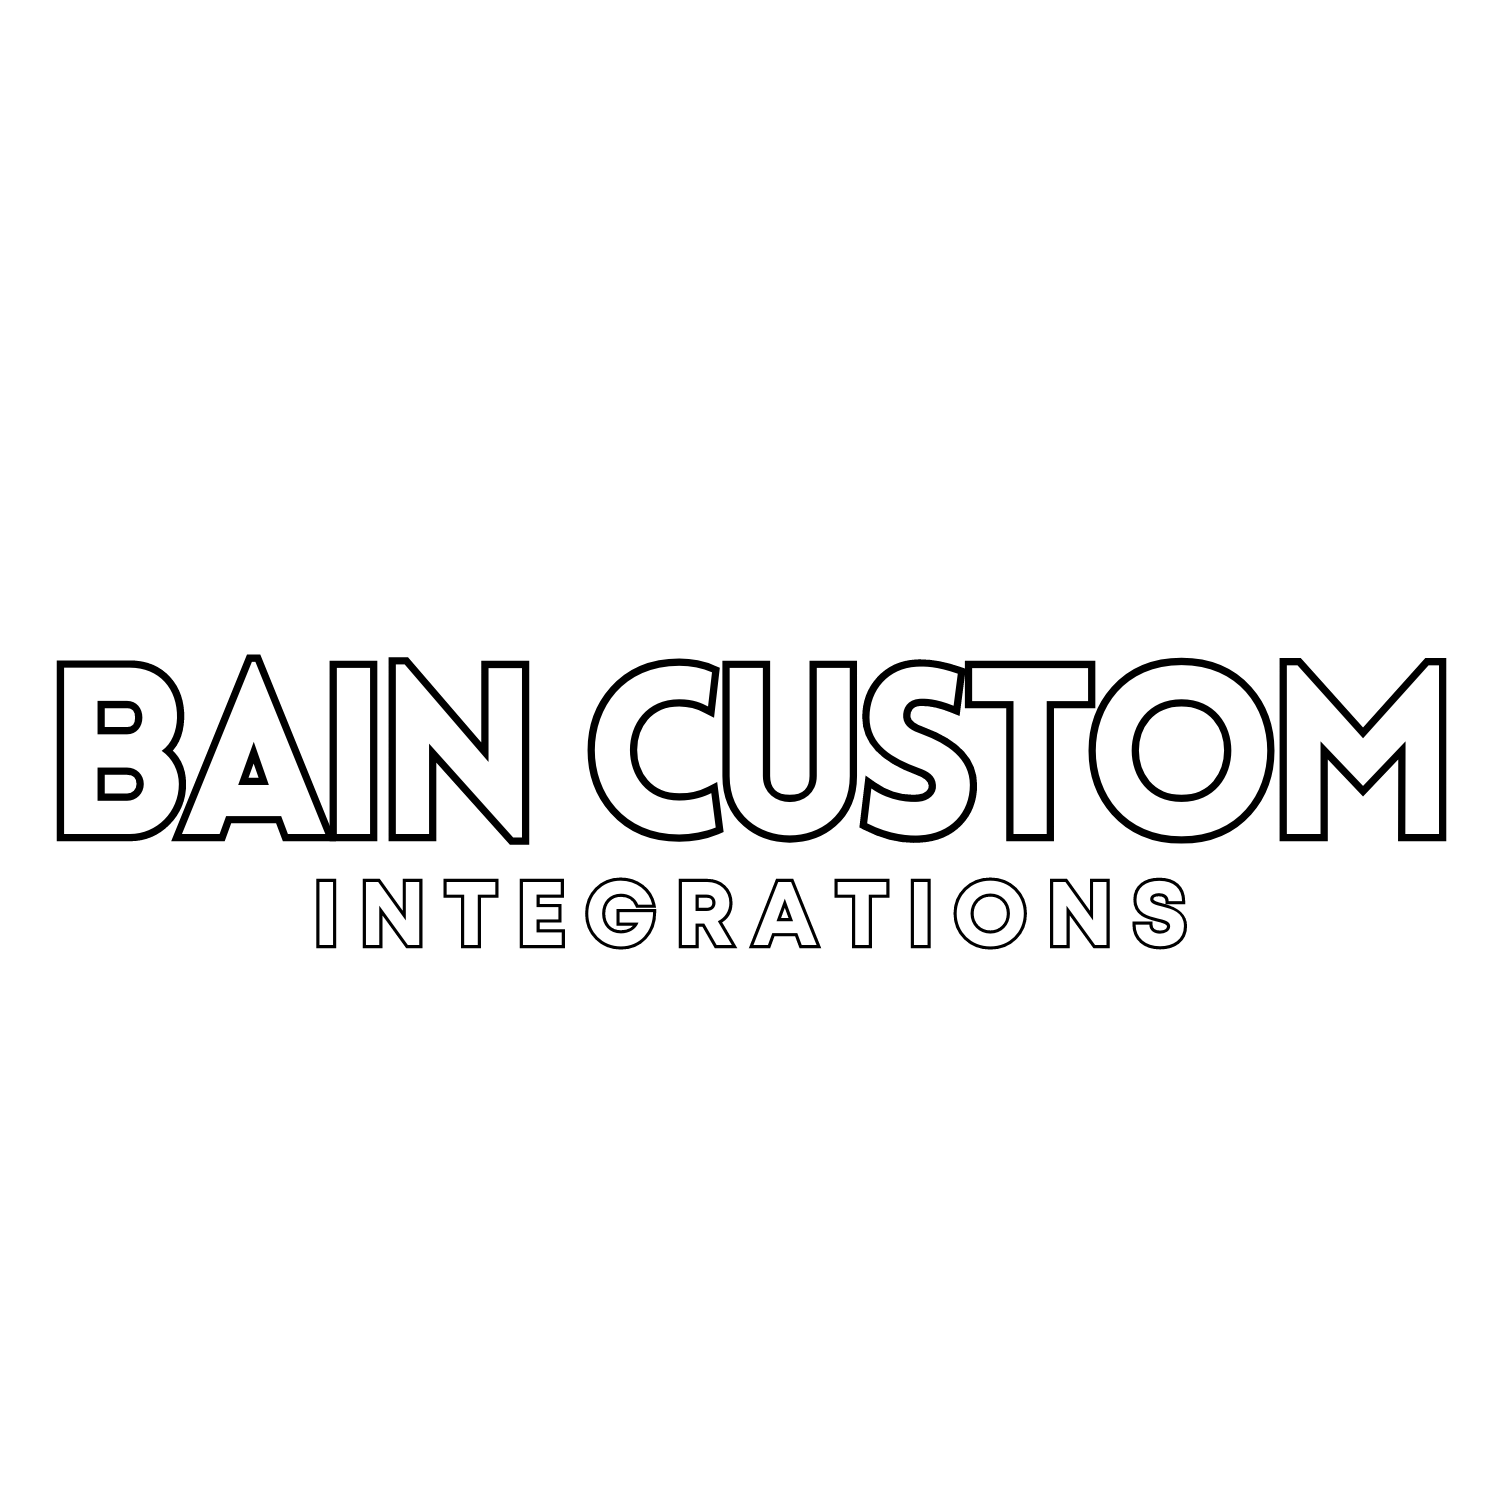 Bain Custom Integrations